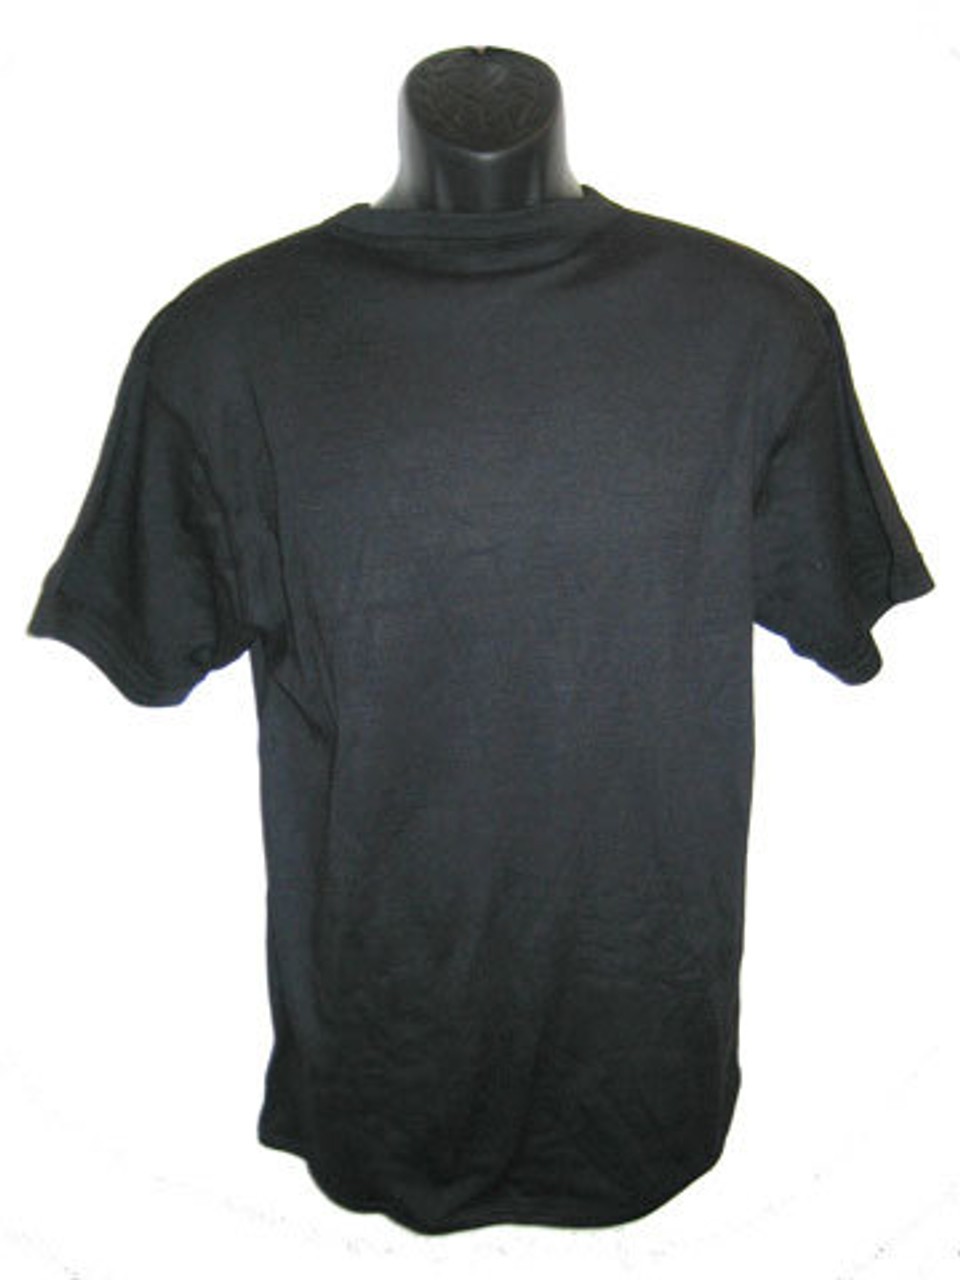 Underwear T-Shirt Black Large PXP134